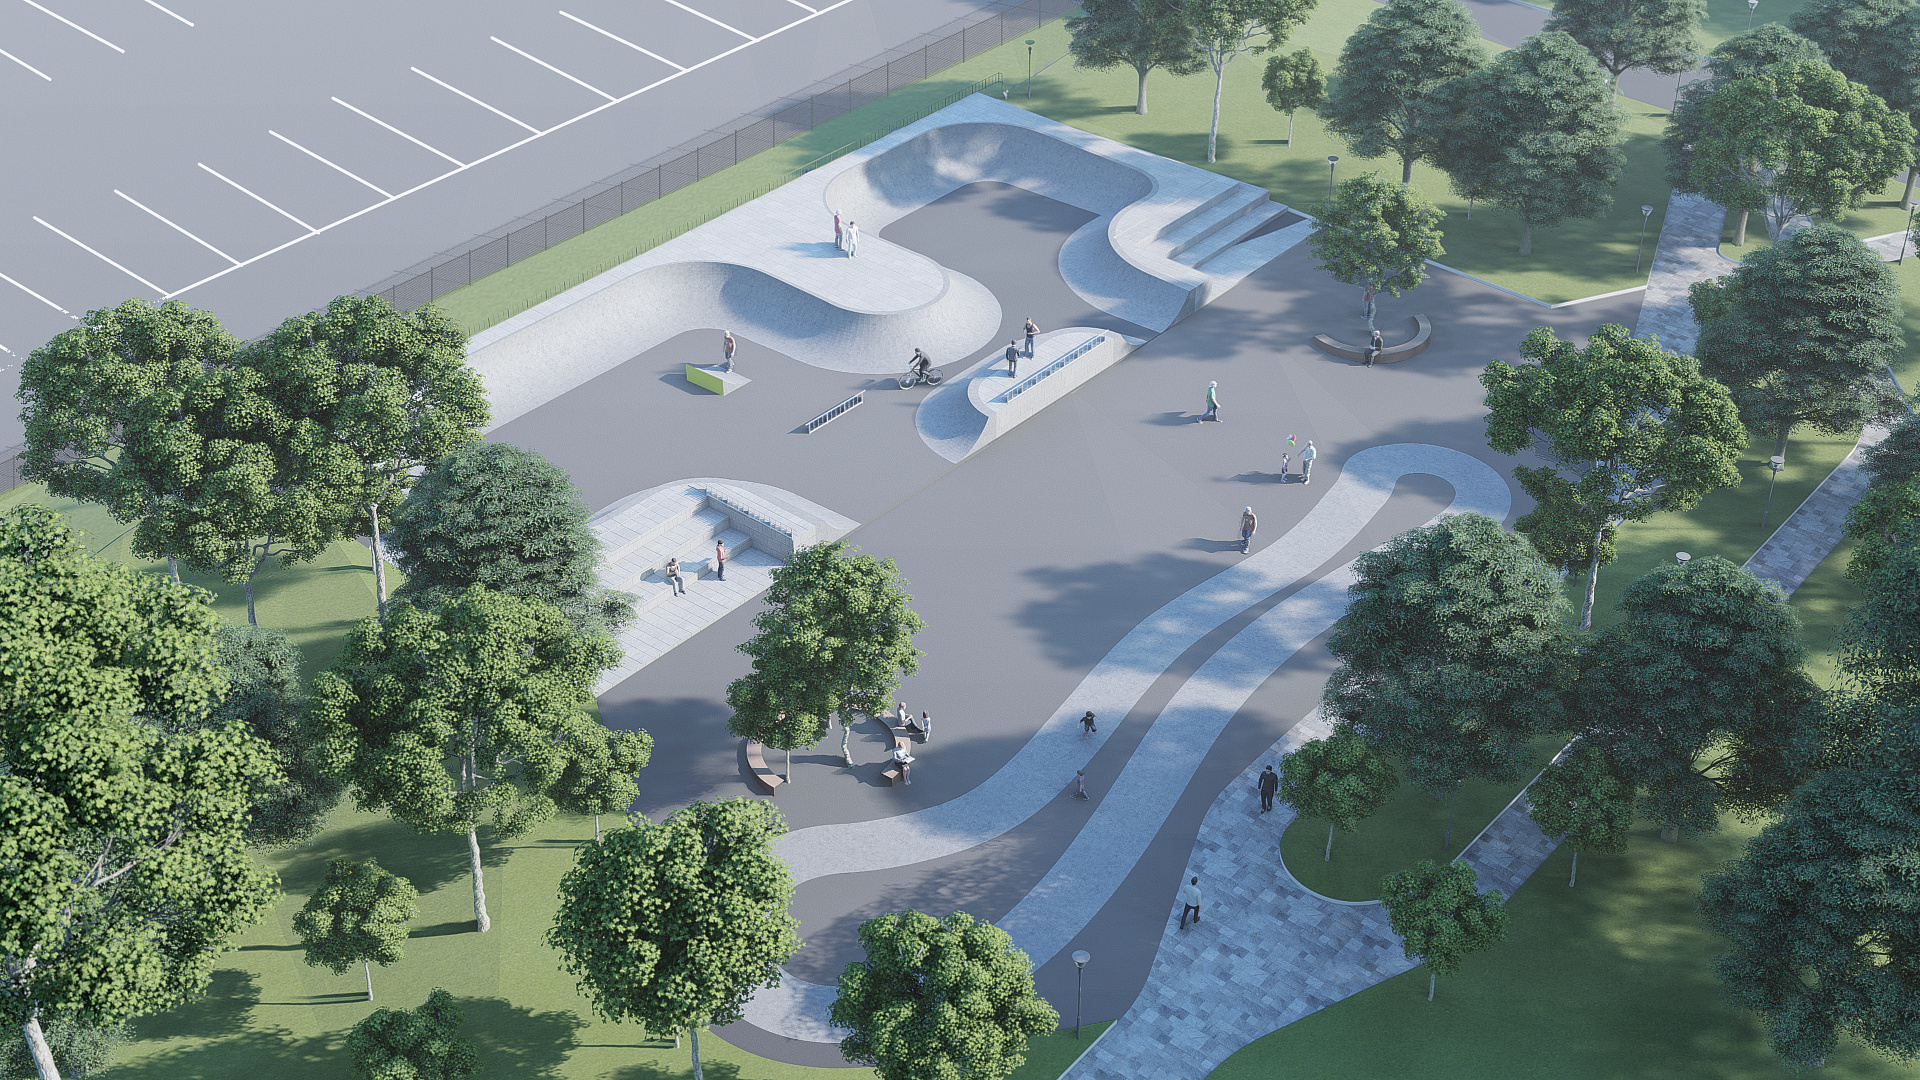 Komarov Boulevard Concept by PROJECT architectural bureau